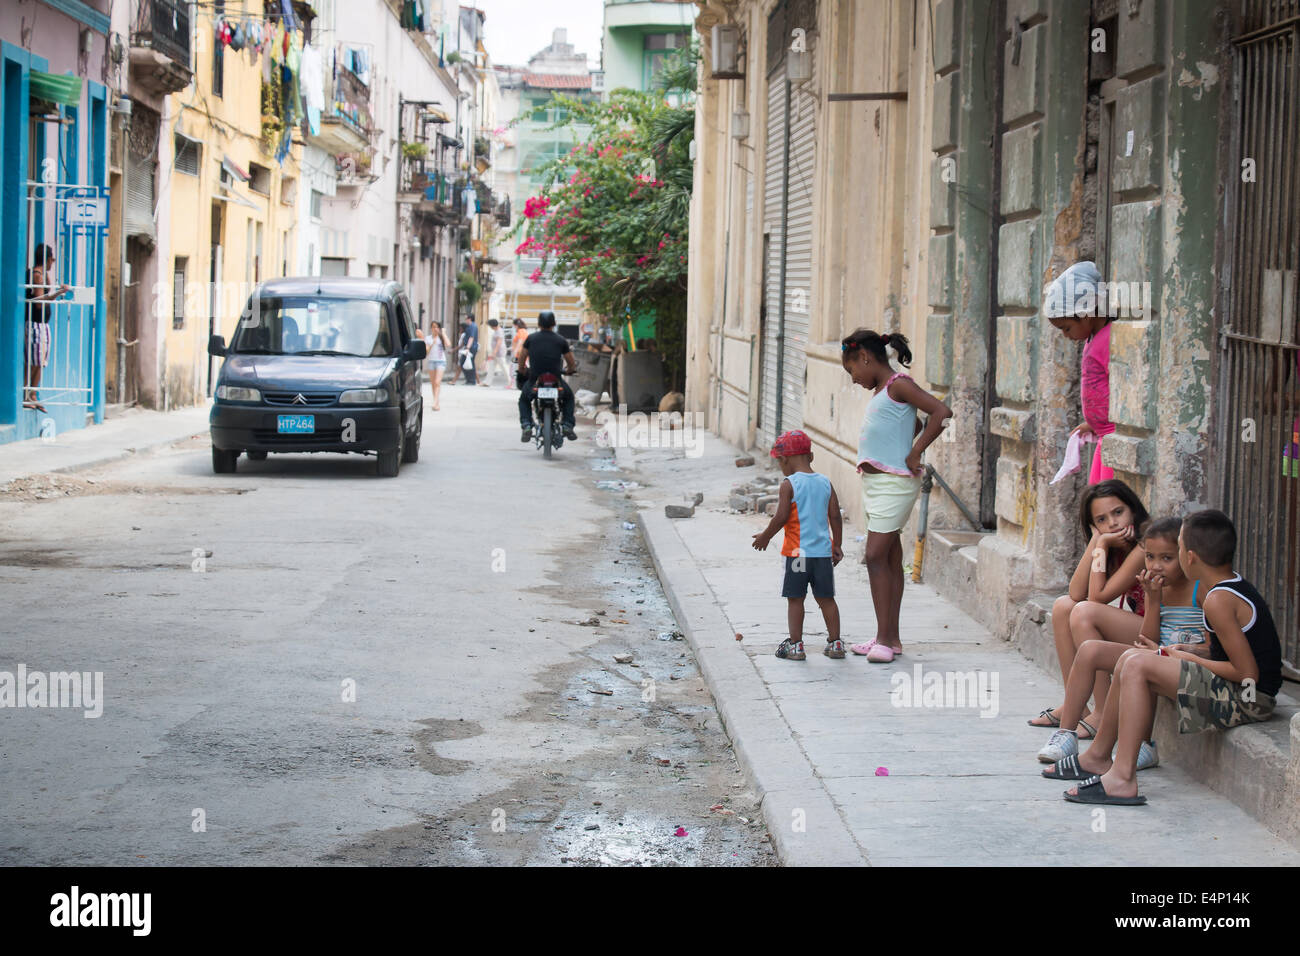 Kinder auf der Straße, Havanna Vieja (Altstadt von Havanna), Havanna, Kuba Stockfoto